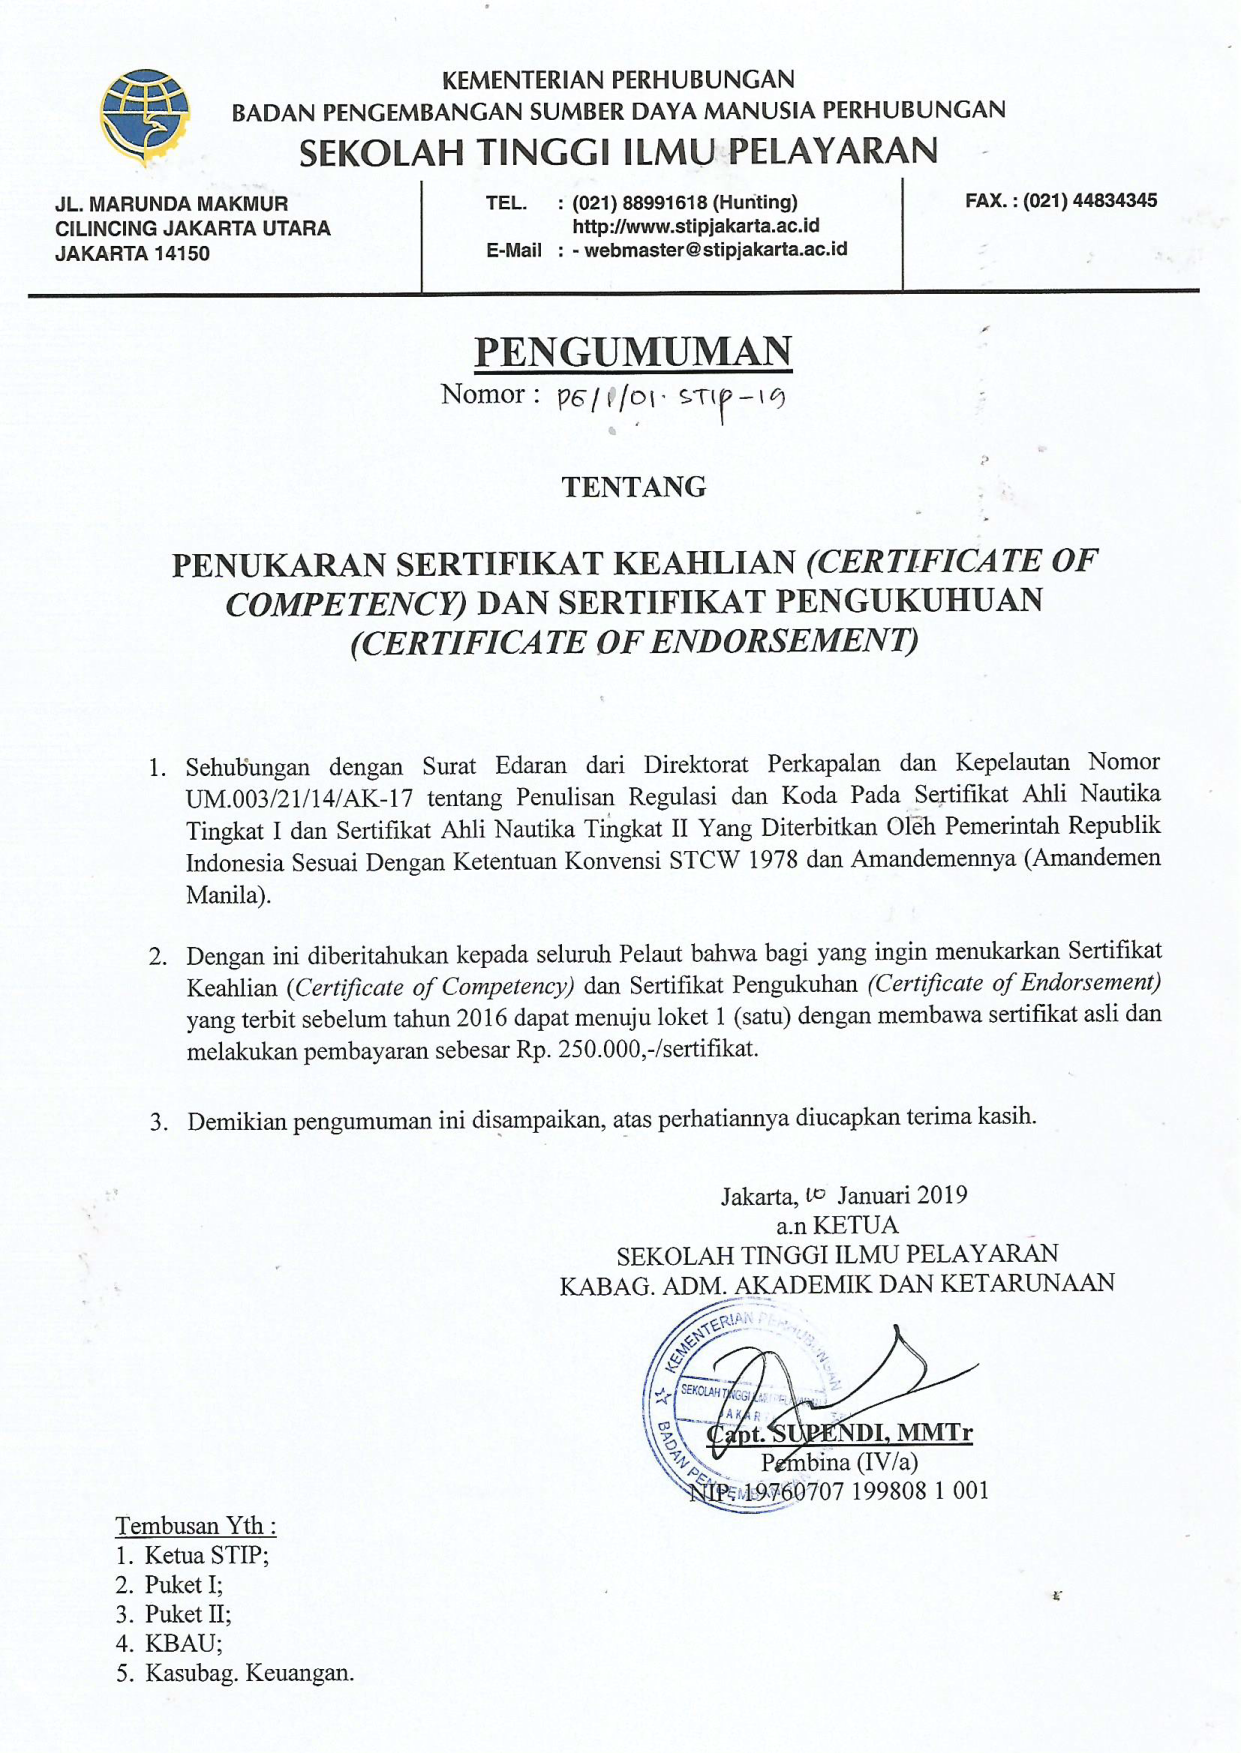 Membership Certificate (COC) STIP JAKARTA